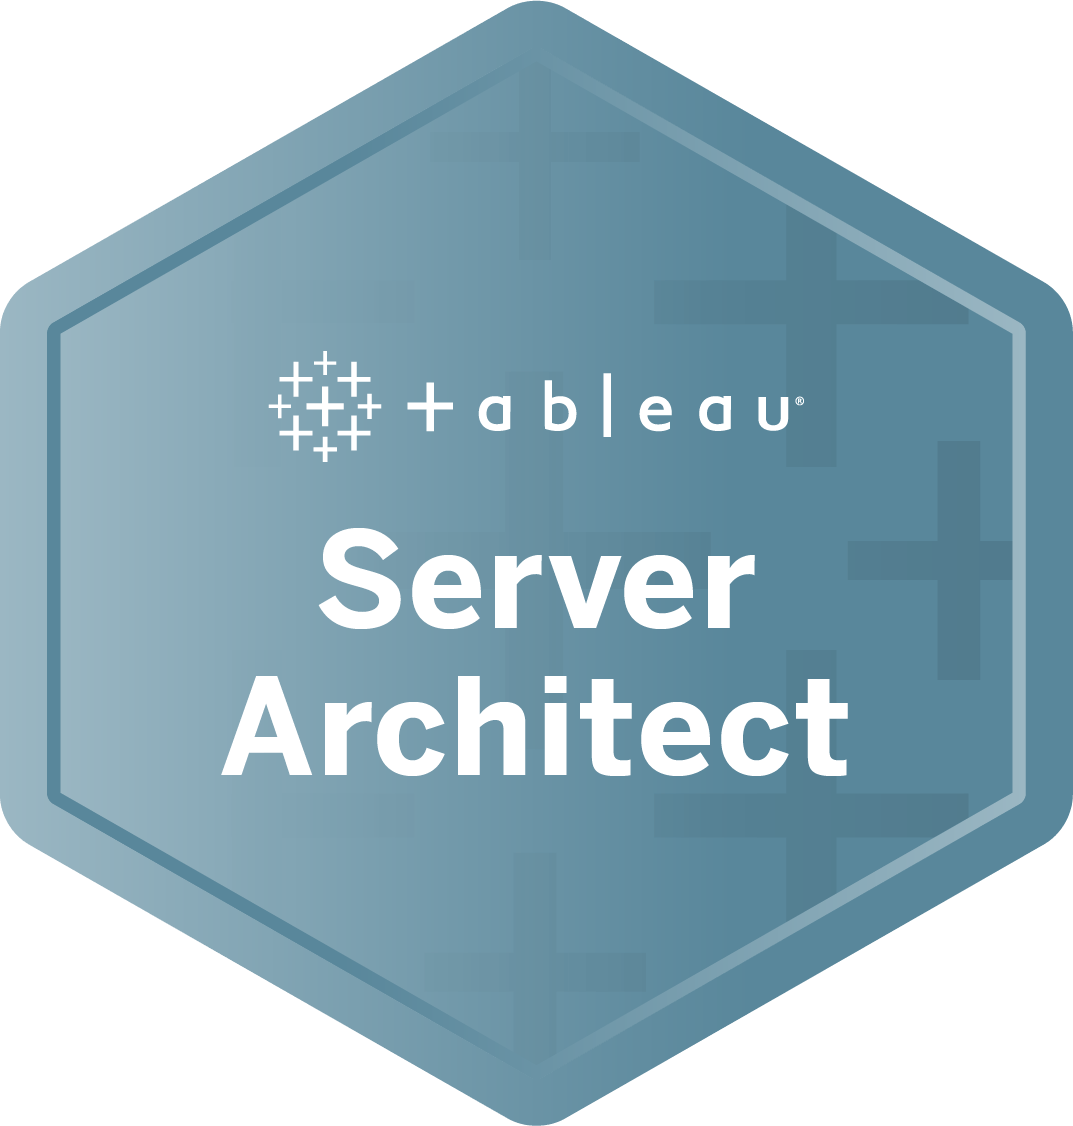  Tableau Certified Server Architect